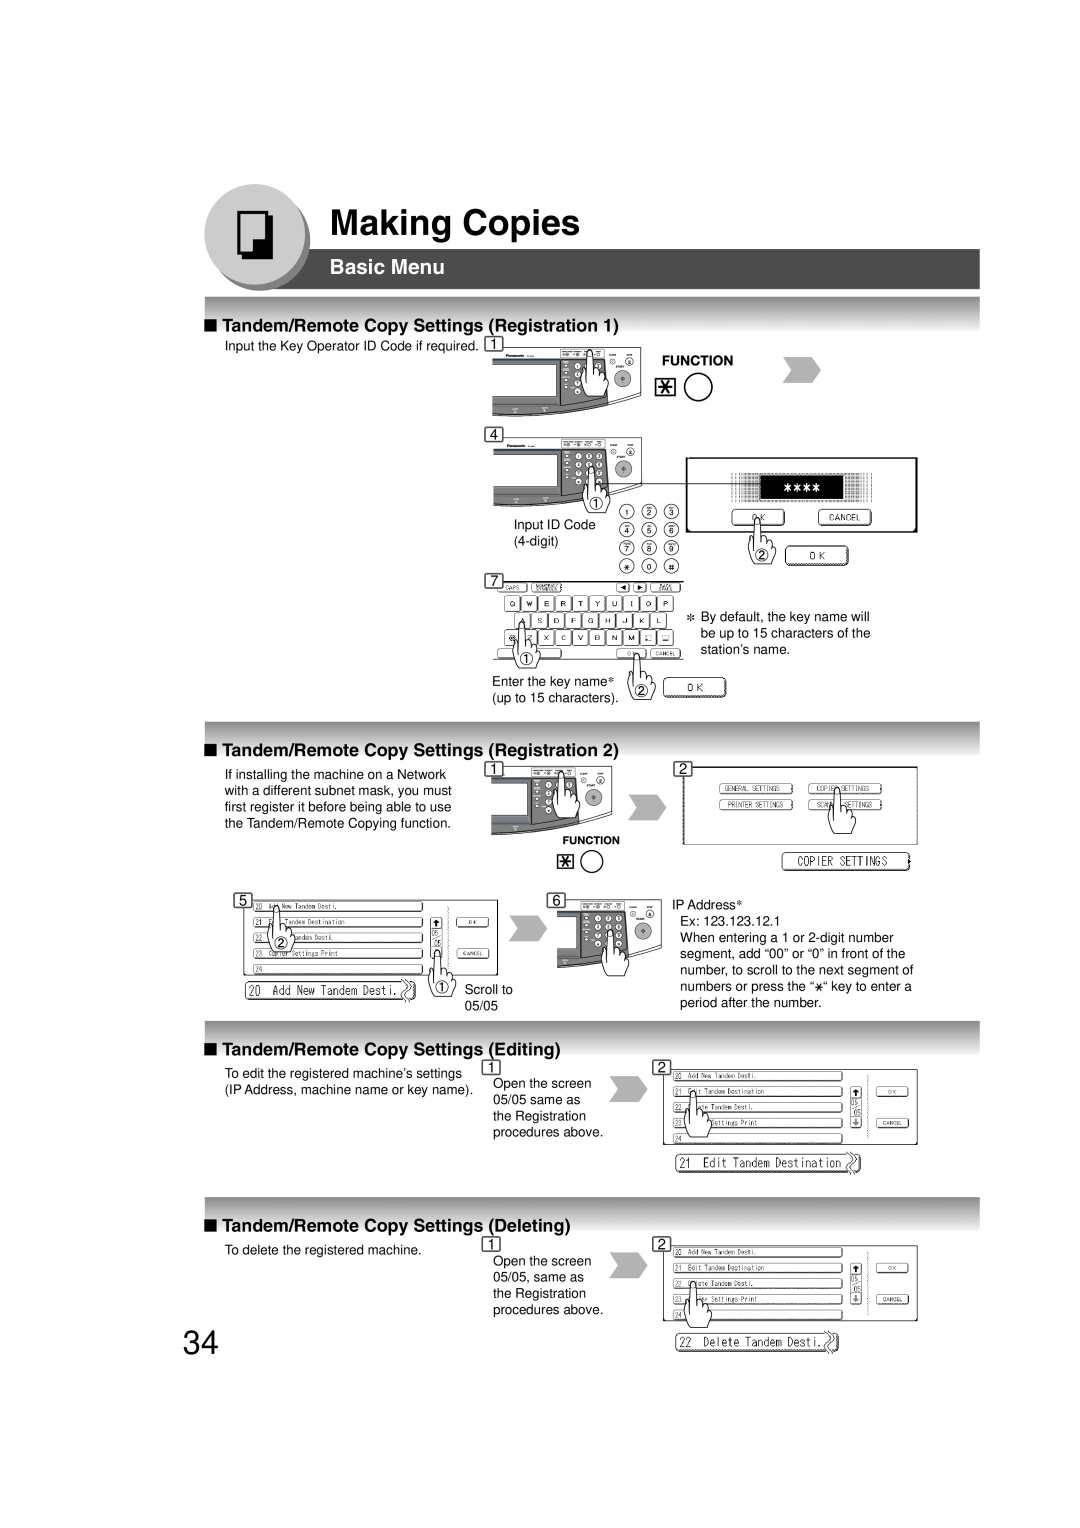 Panasonic 4520 Tandem/Remote Copy Settings Registration, Tandem/Remote Copy Settings Editing, Making Copies, Basic Menu 